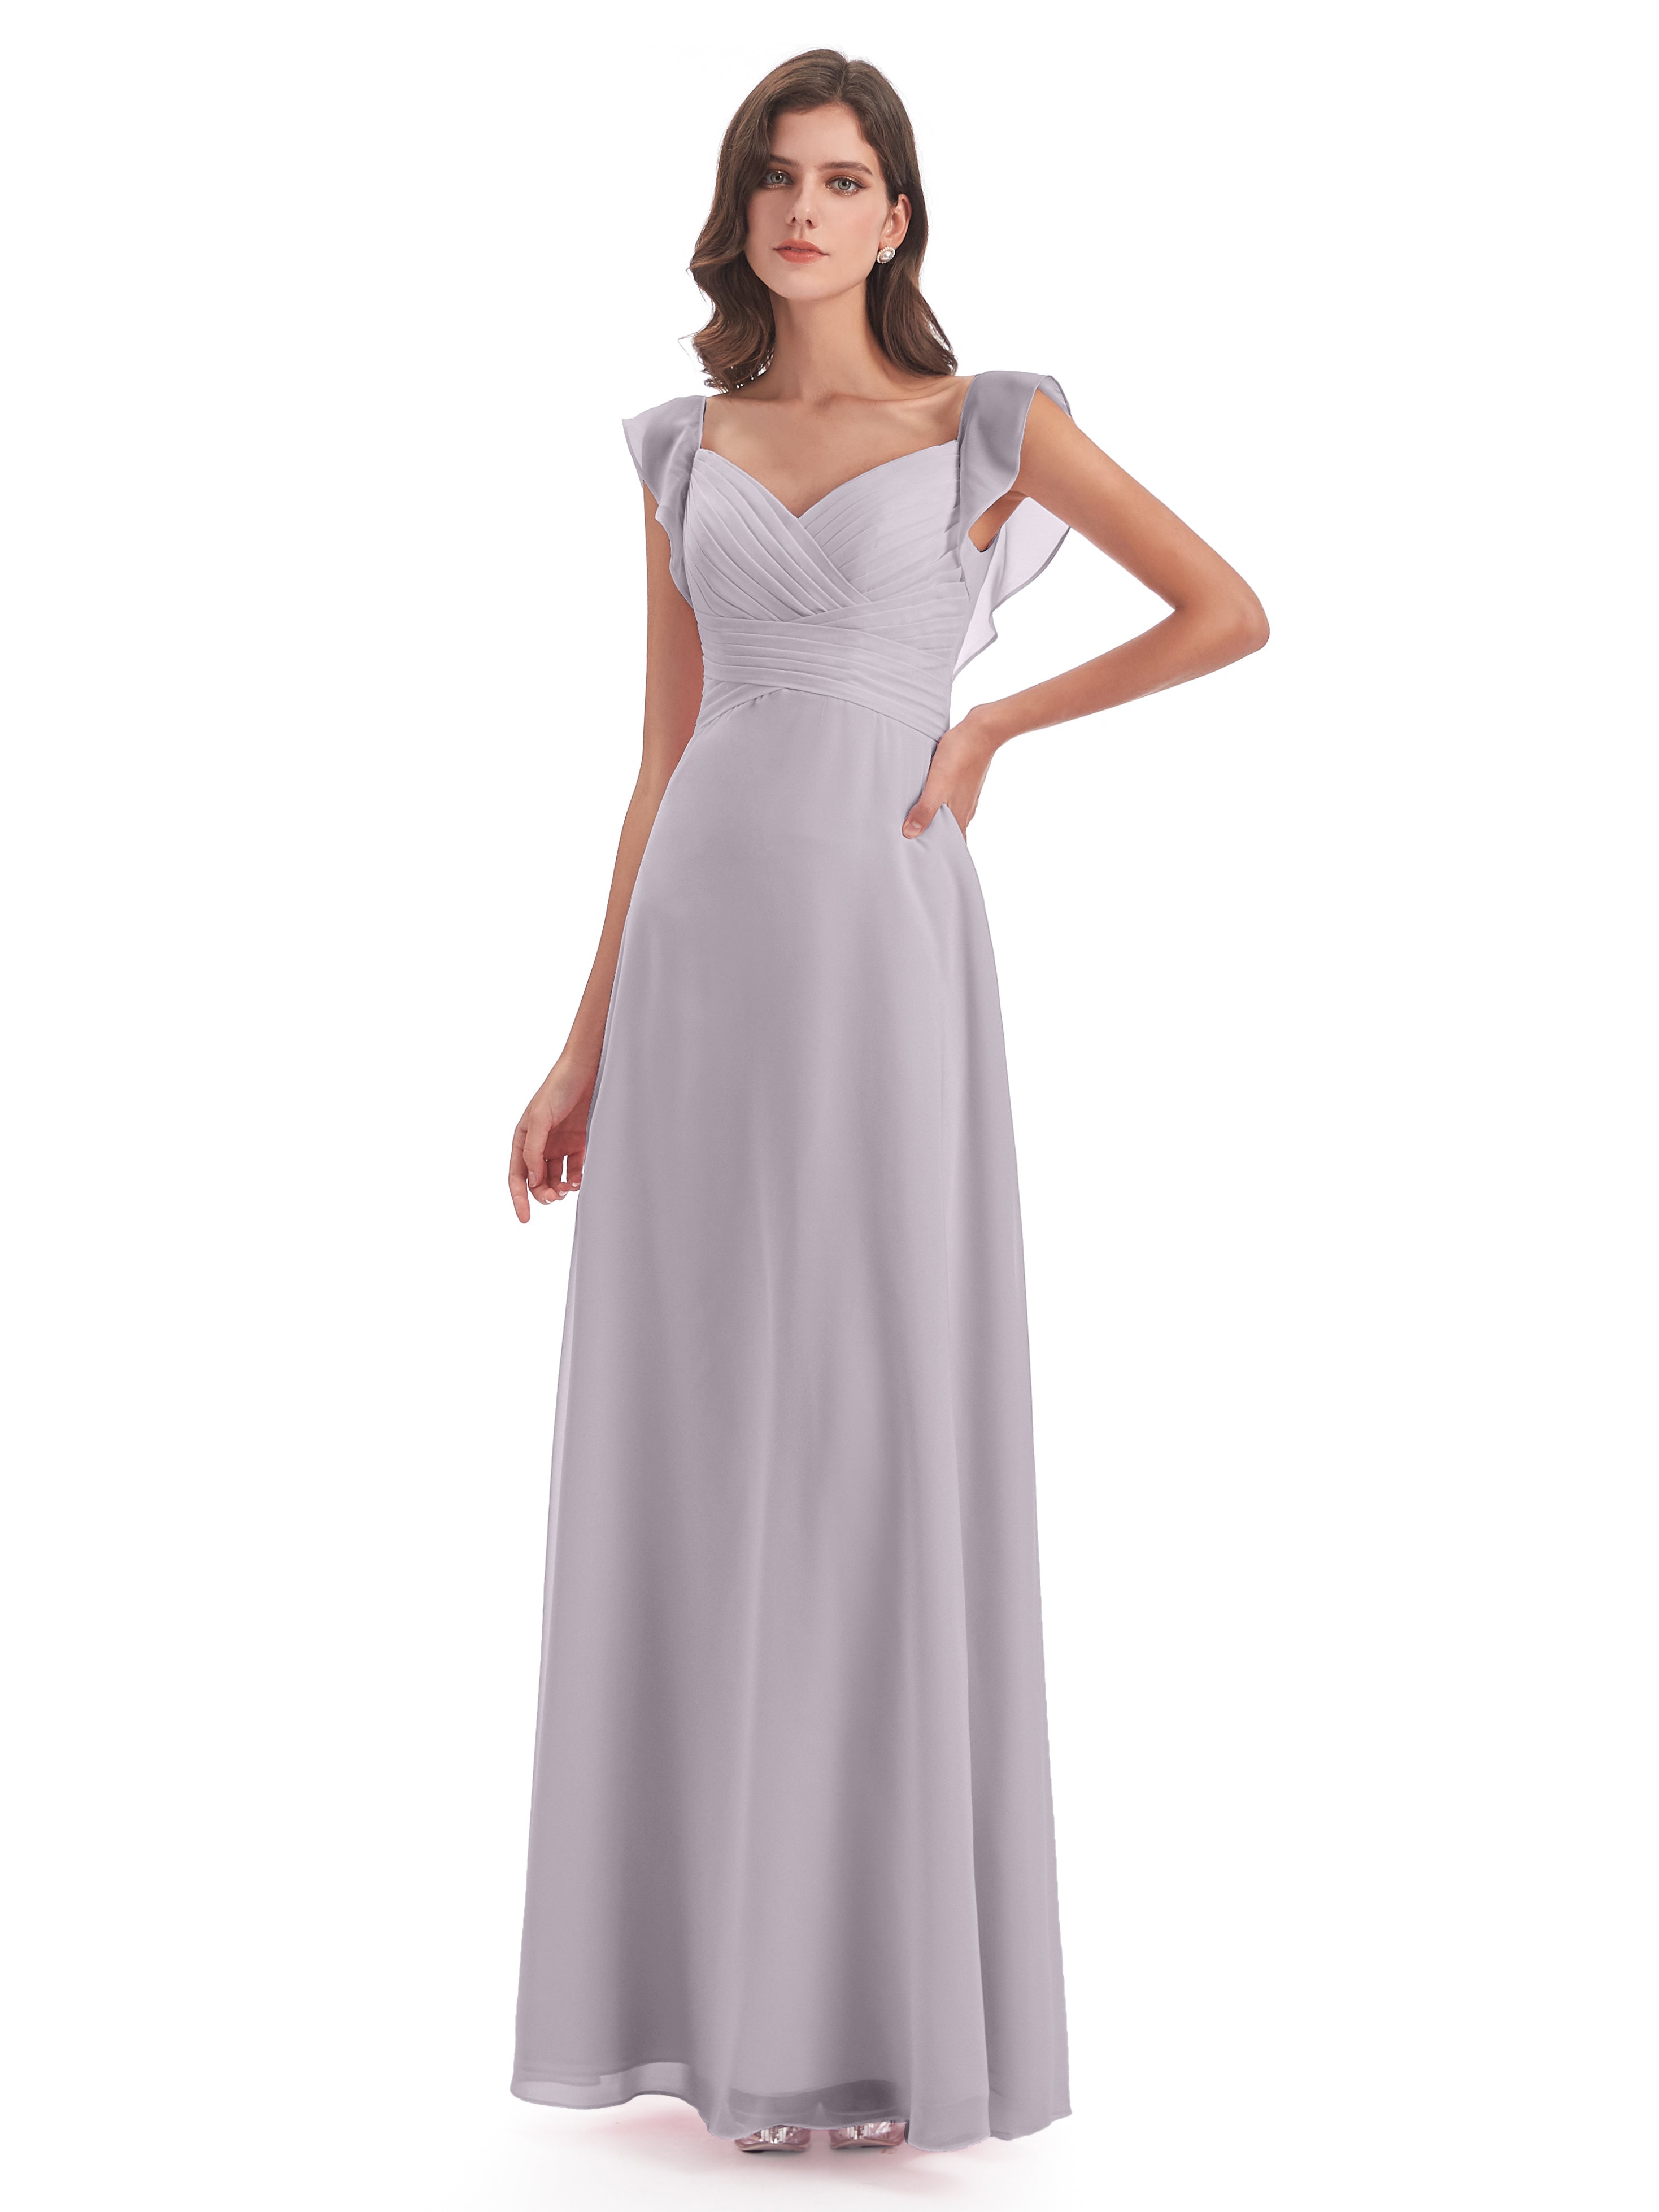 Why You Should Have a Dusk Bridesmaid Dress? | Cicinia